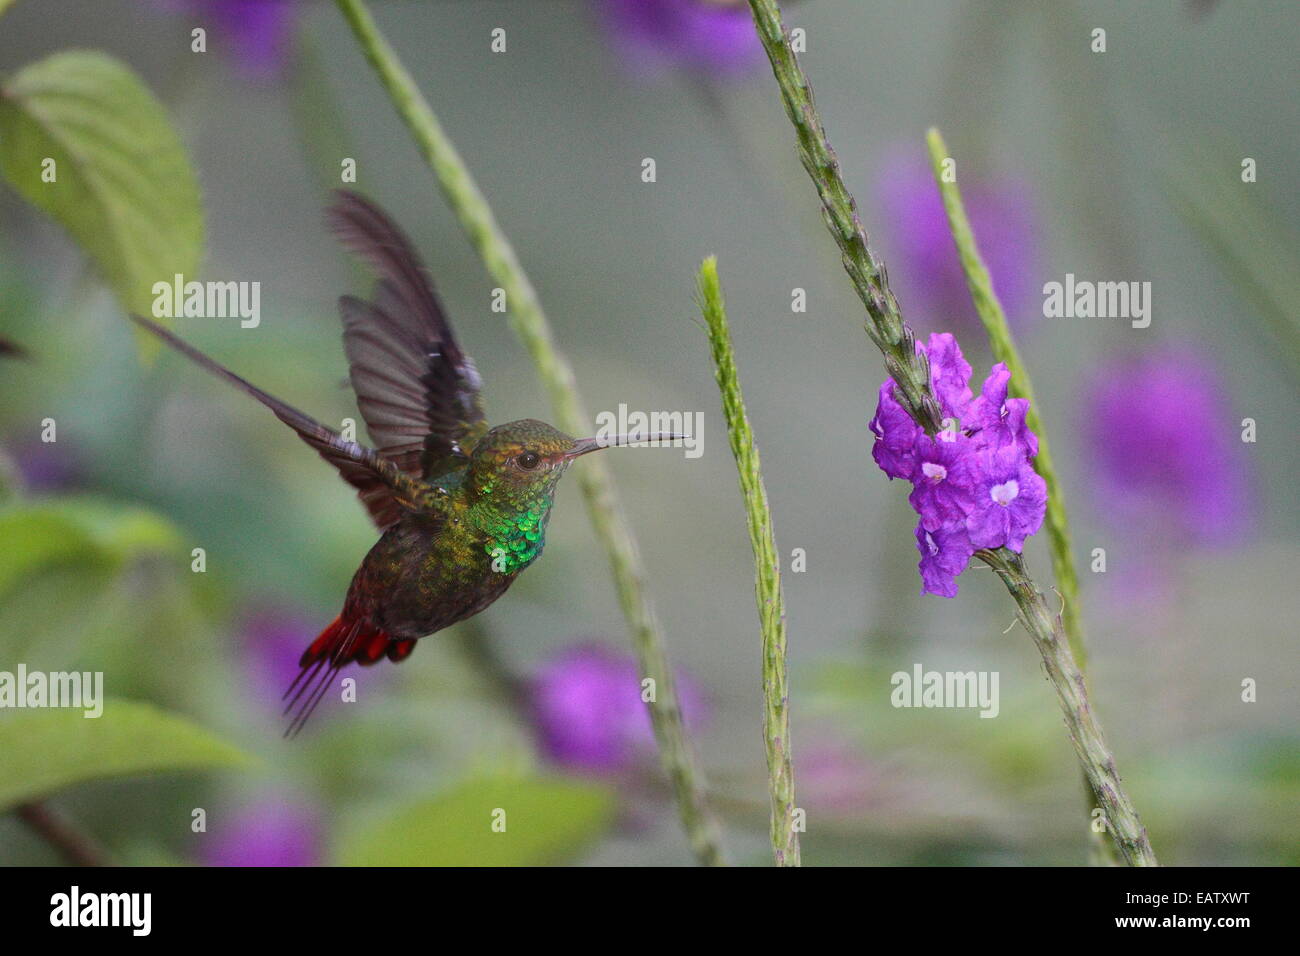 A rufous-tailed hummingbird, Amazilia tzacatl, foraging on purple flowers. Stock Photo